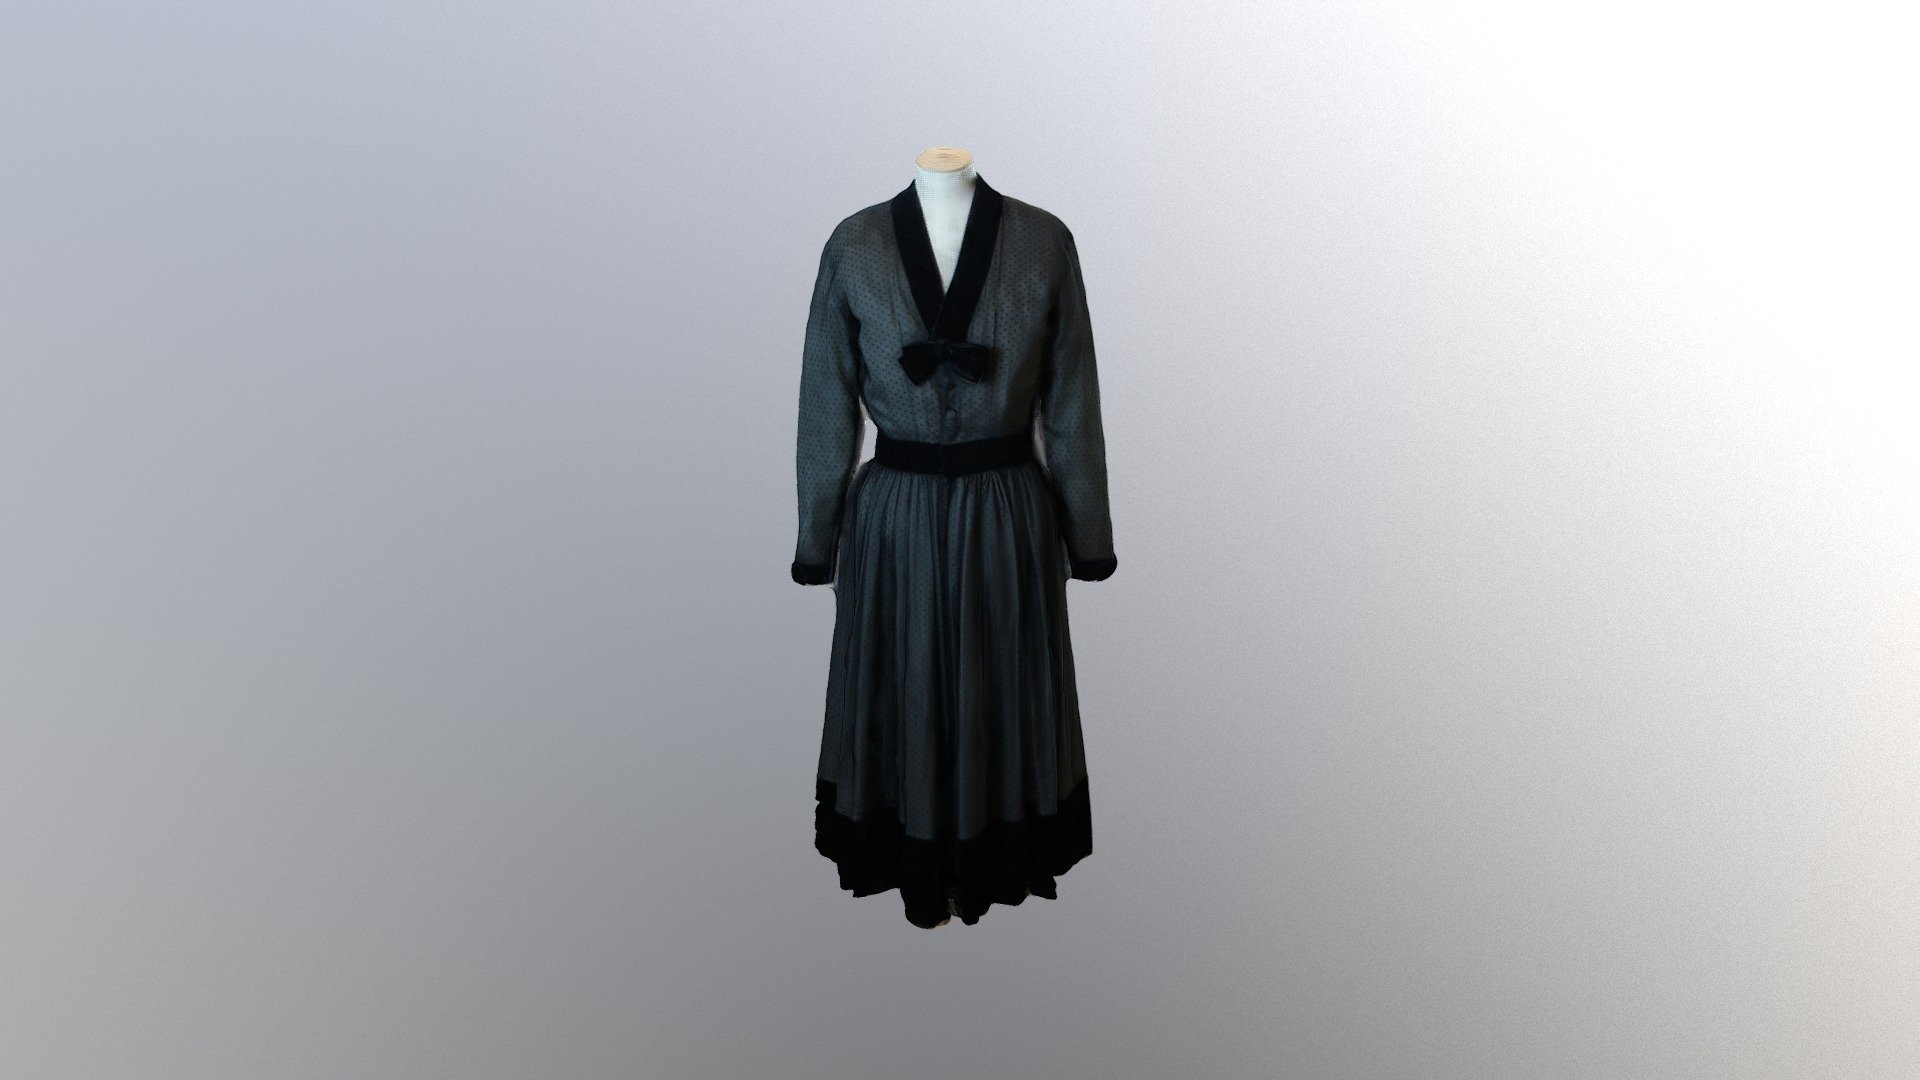 1952 Pierre Balmain dress